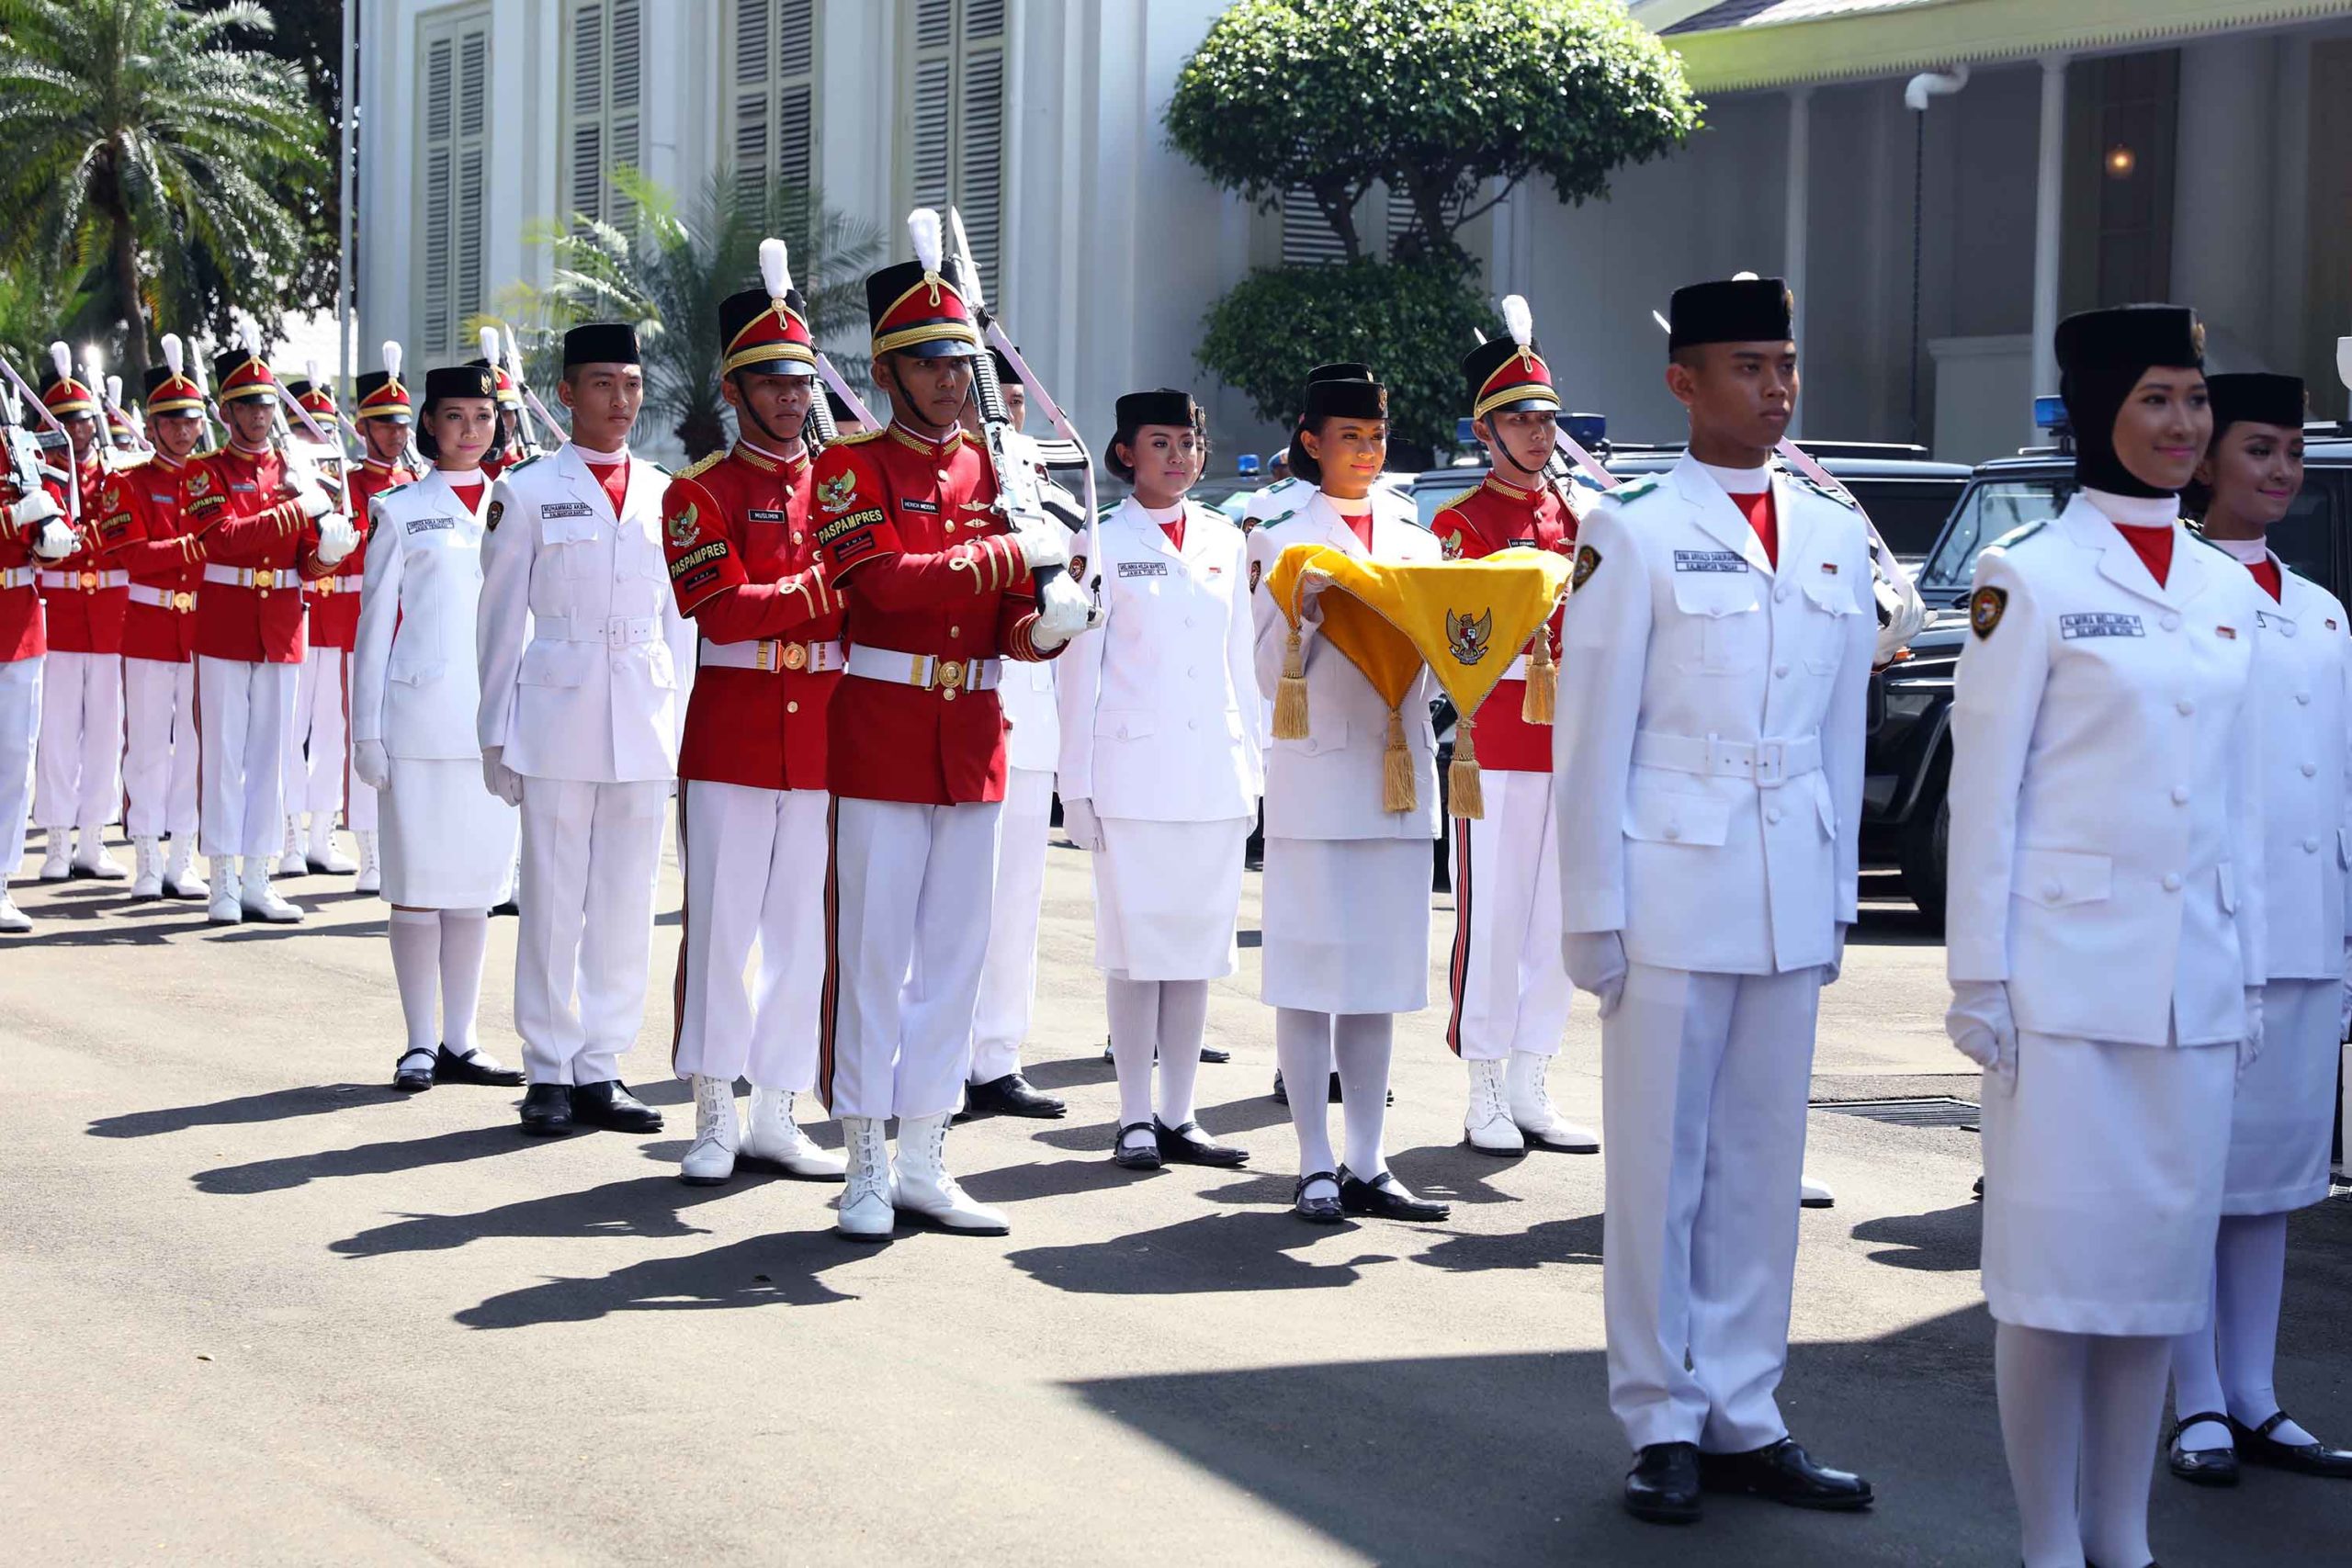 Jika anda terpilih menjadi paskibraka, hal apa yang akan anda berikan/lakukan untuk bangsa & negara indonesia setelah selesai bertugas sebagai paskibraka di upacara peringatan kemerdekaan ri?